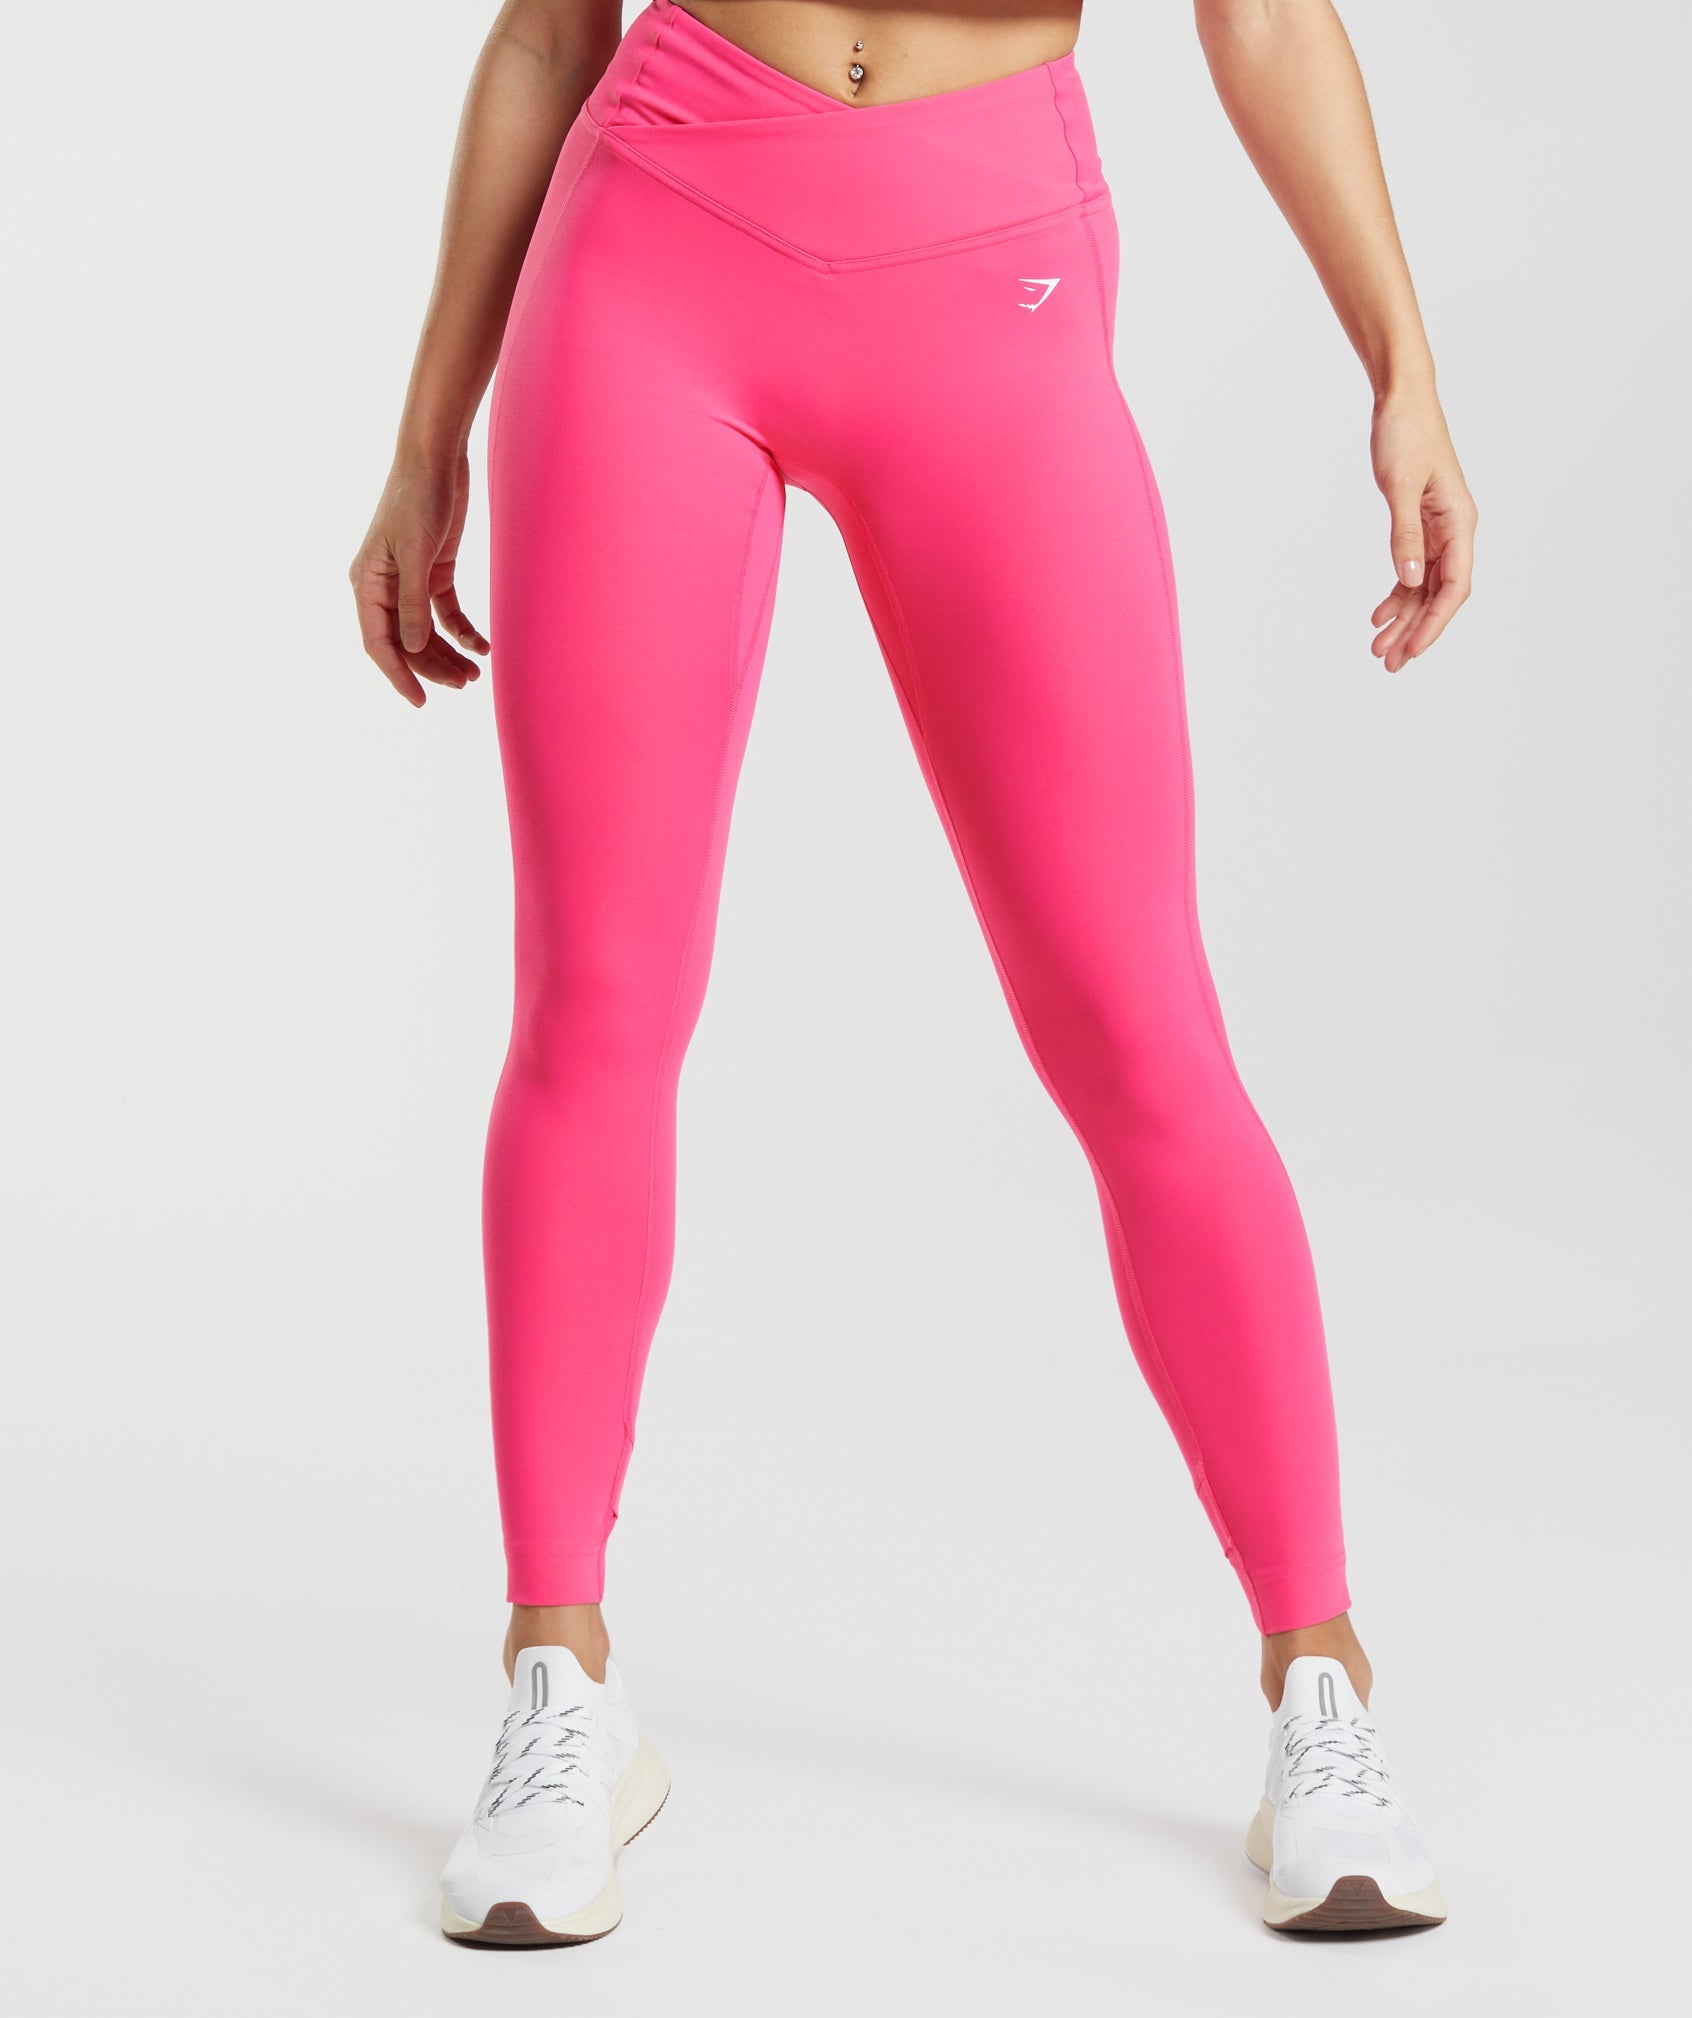 Nike Performance HI RISE - Leggings - active fuchsia/white/neon pink 